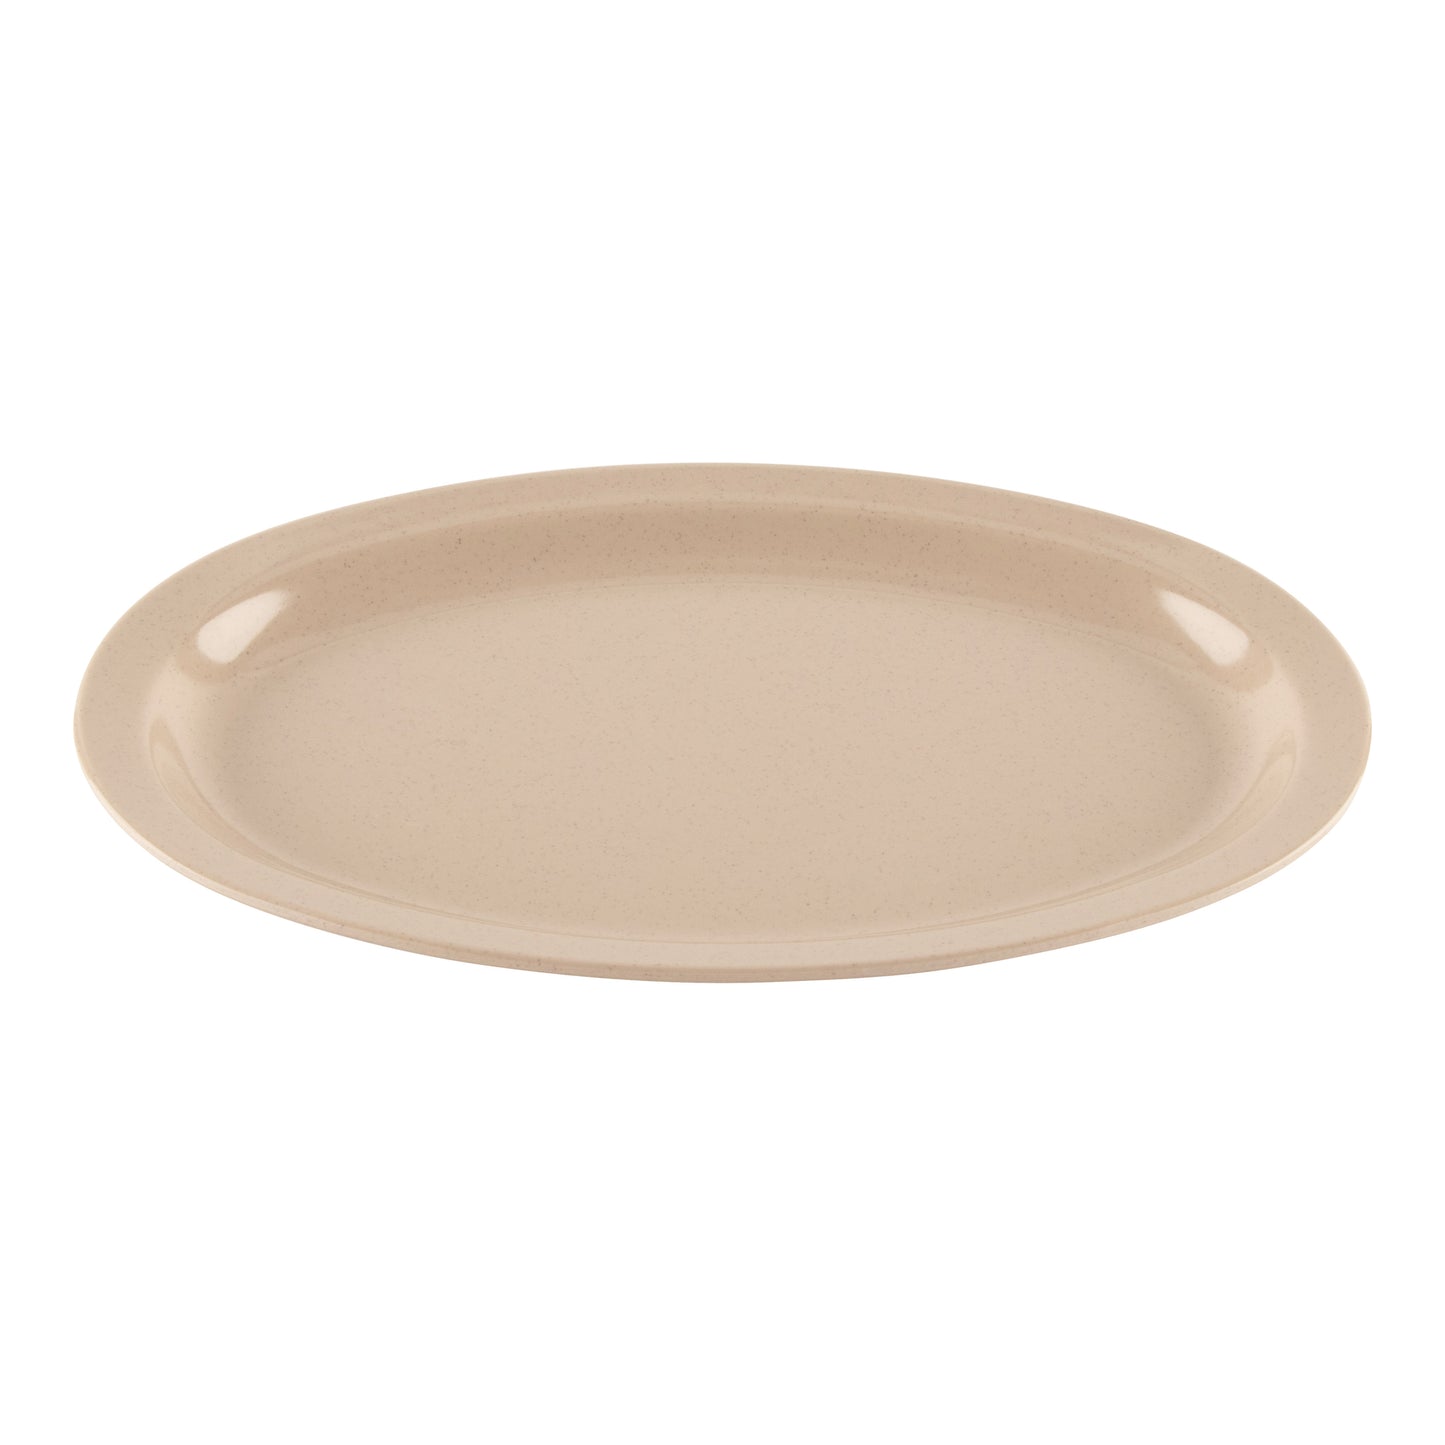 11.75" x 8.25" Oval Platter (12 Pack)